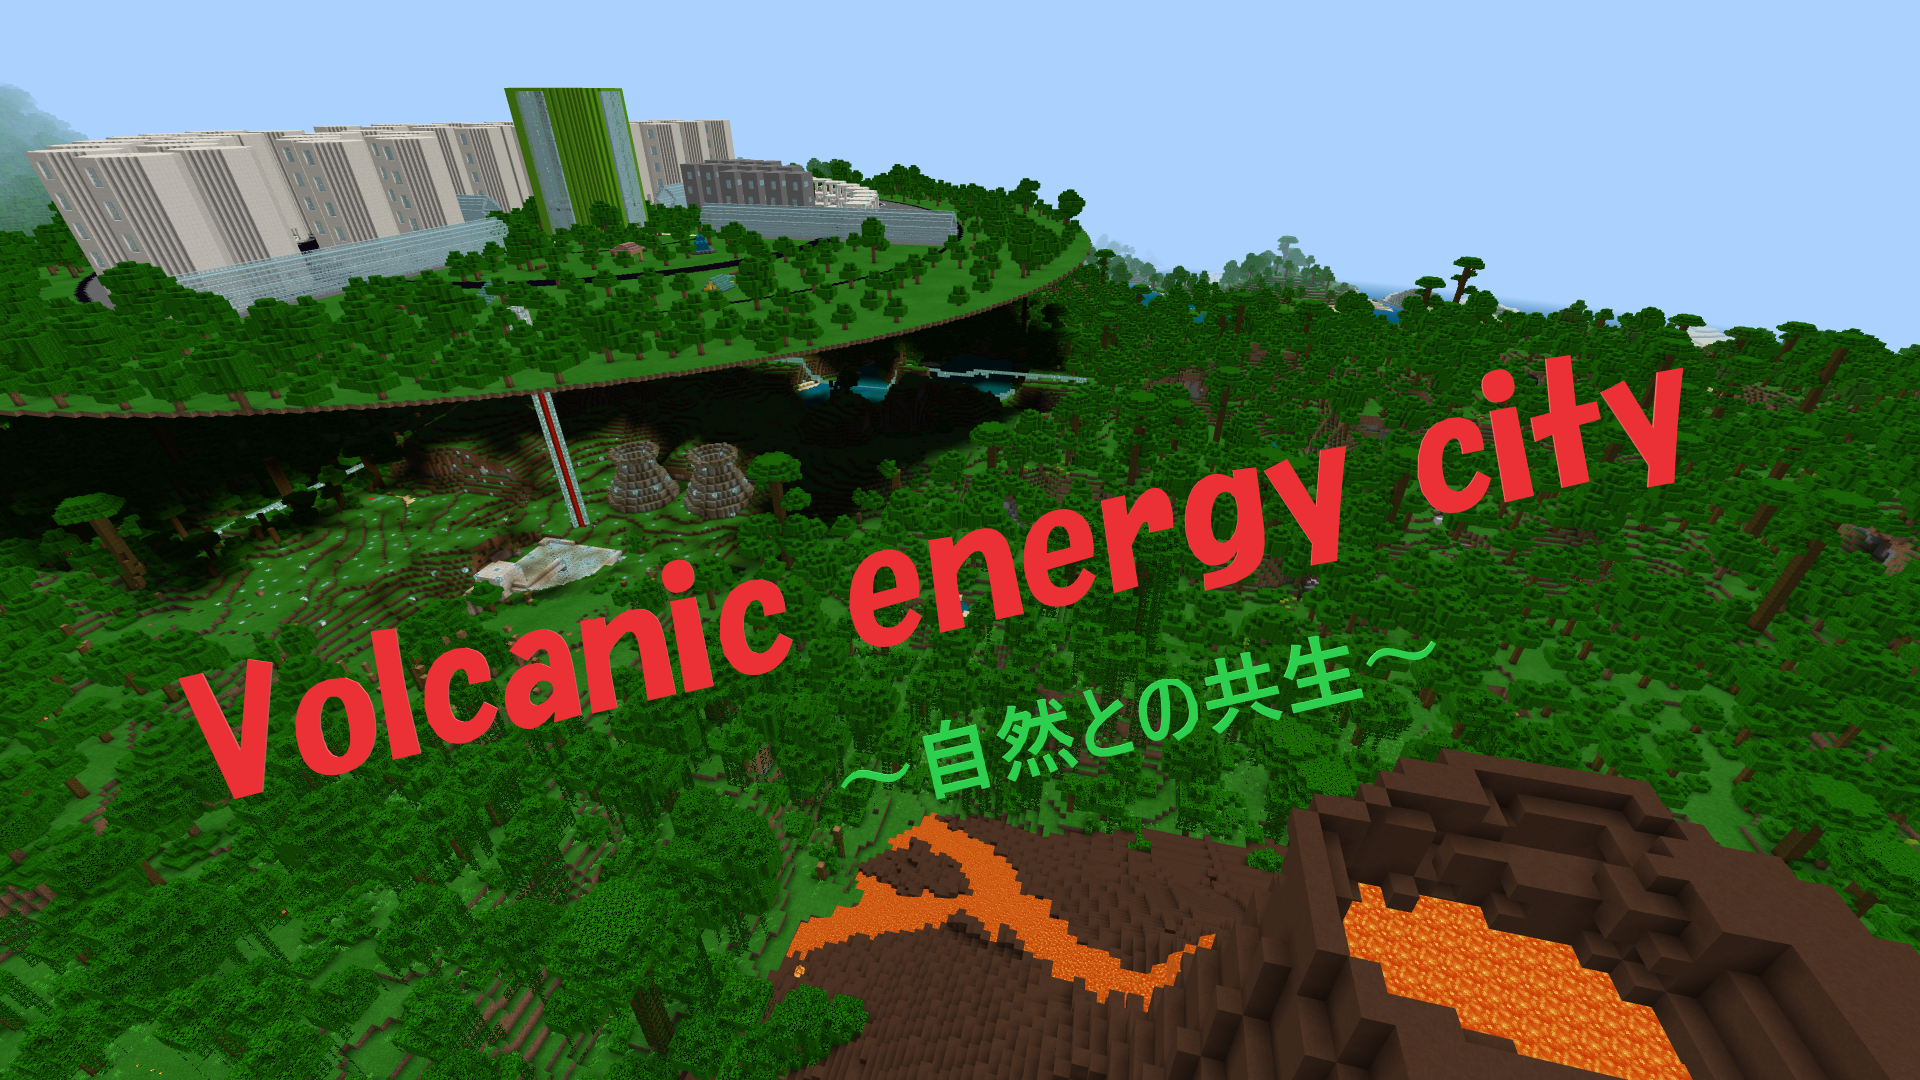 Volcanic energy city 　　　　～自然との共生～